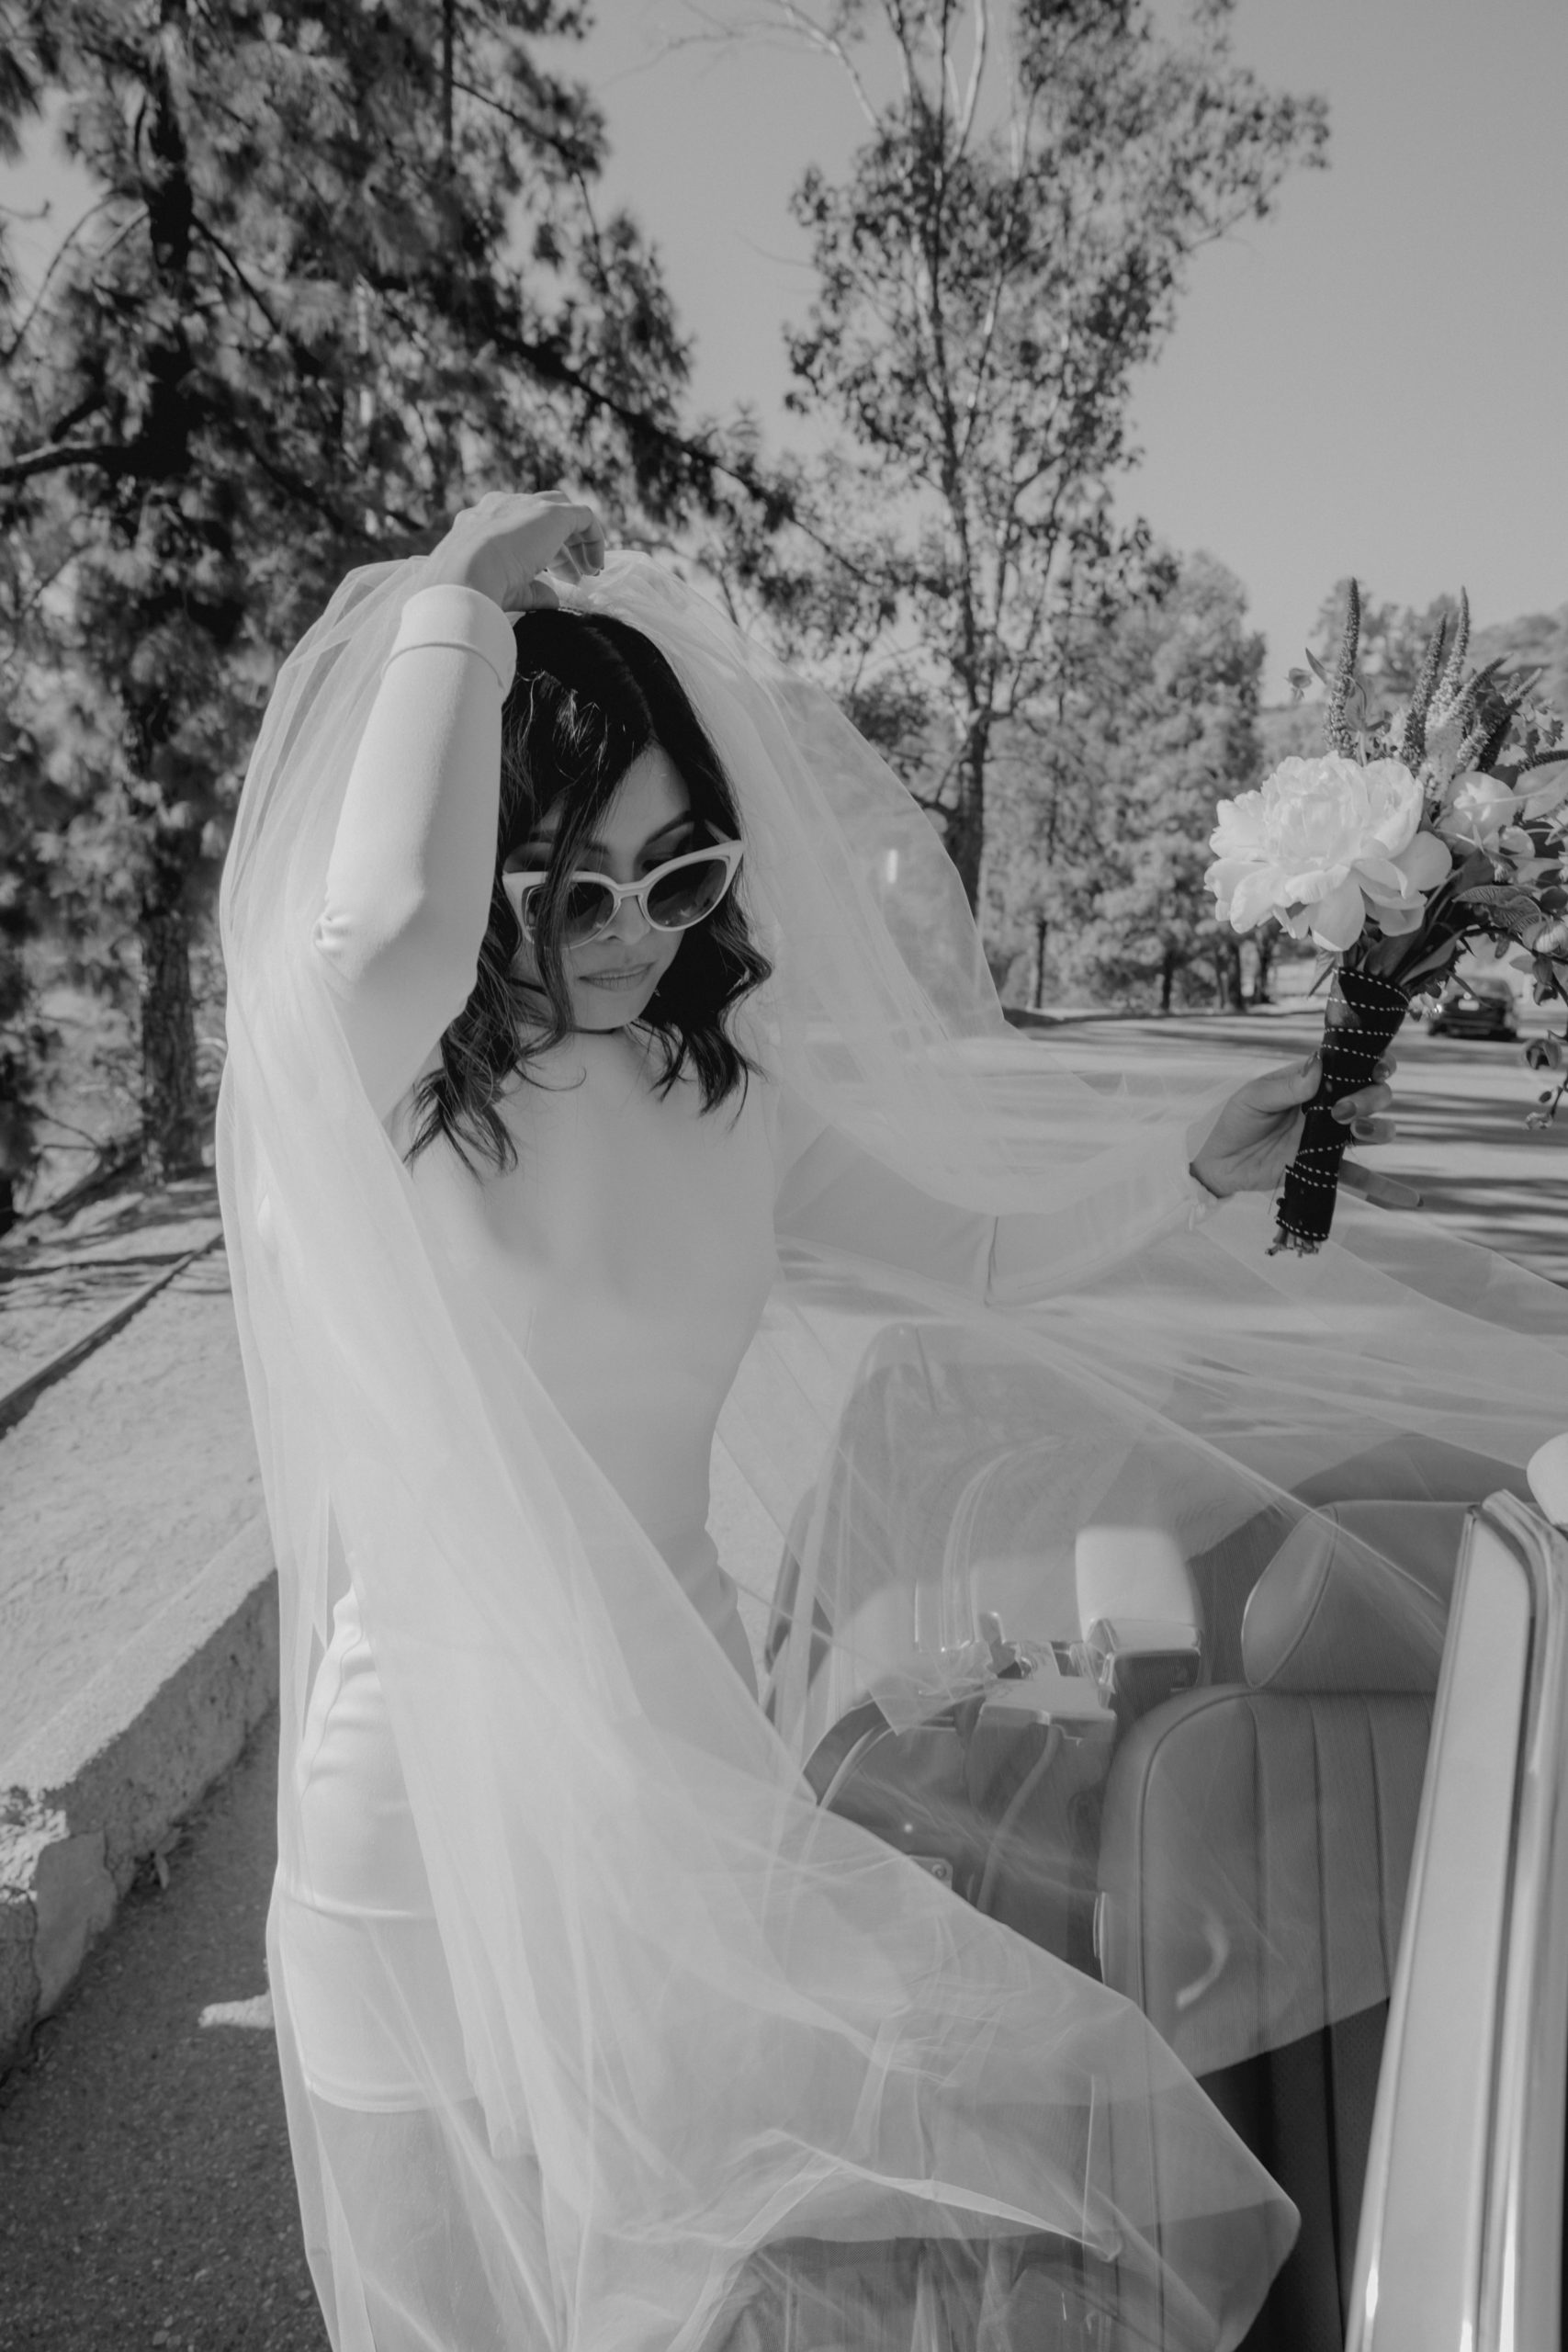 Stylish Bridal Editorial with Los Angeles Wedding Photographer